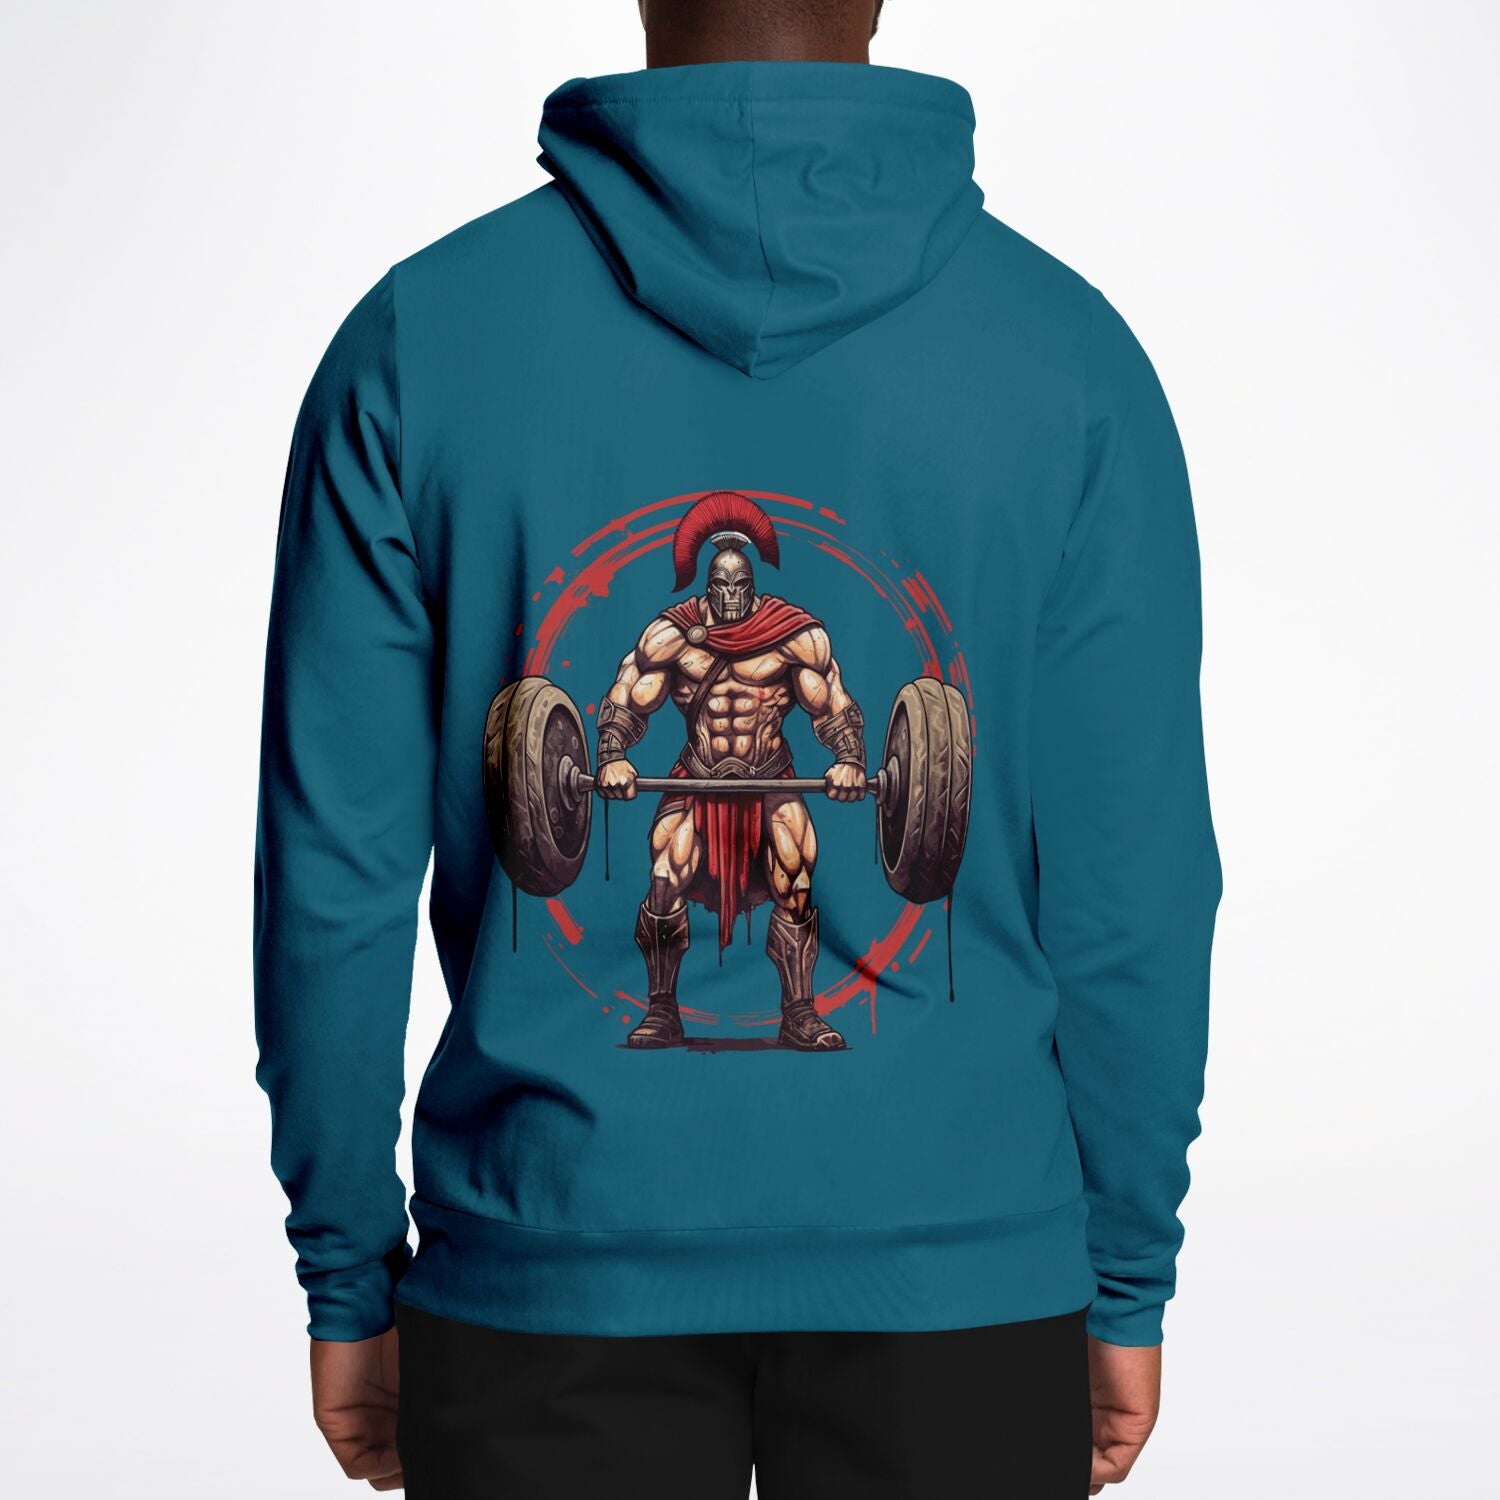 Jack fitness hoodie